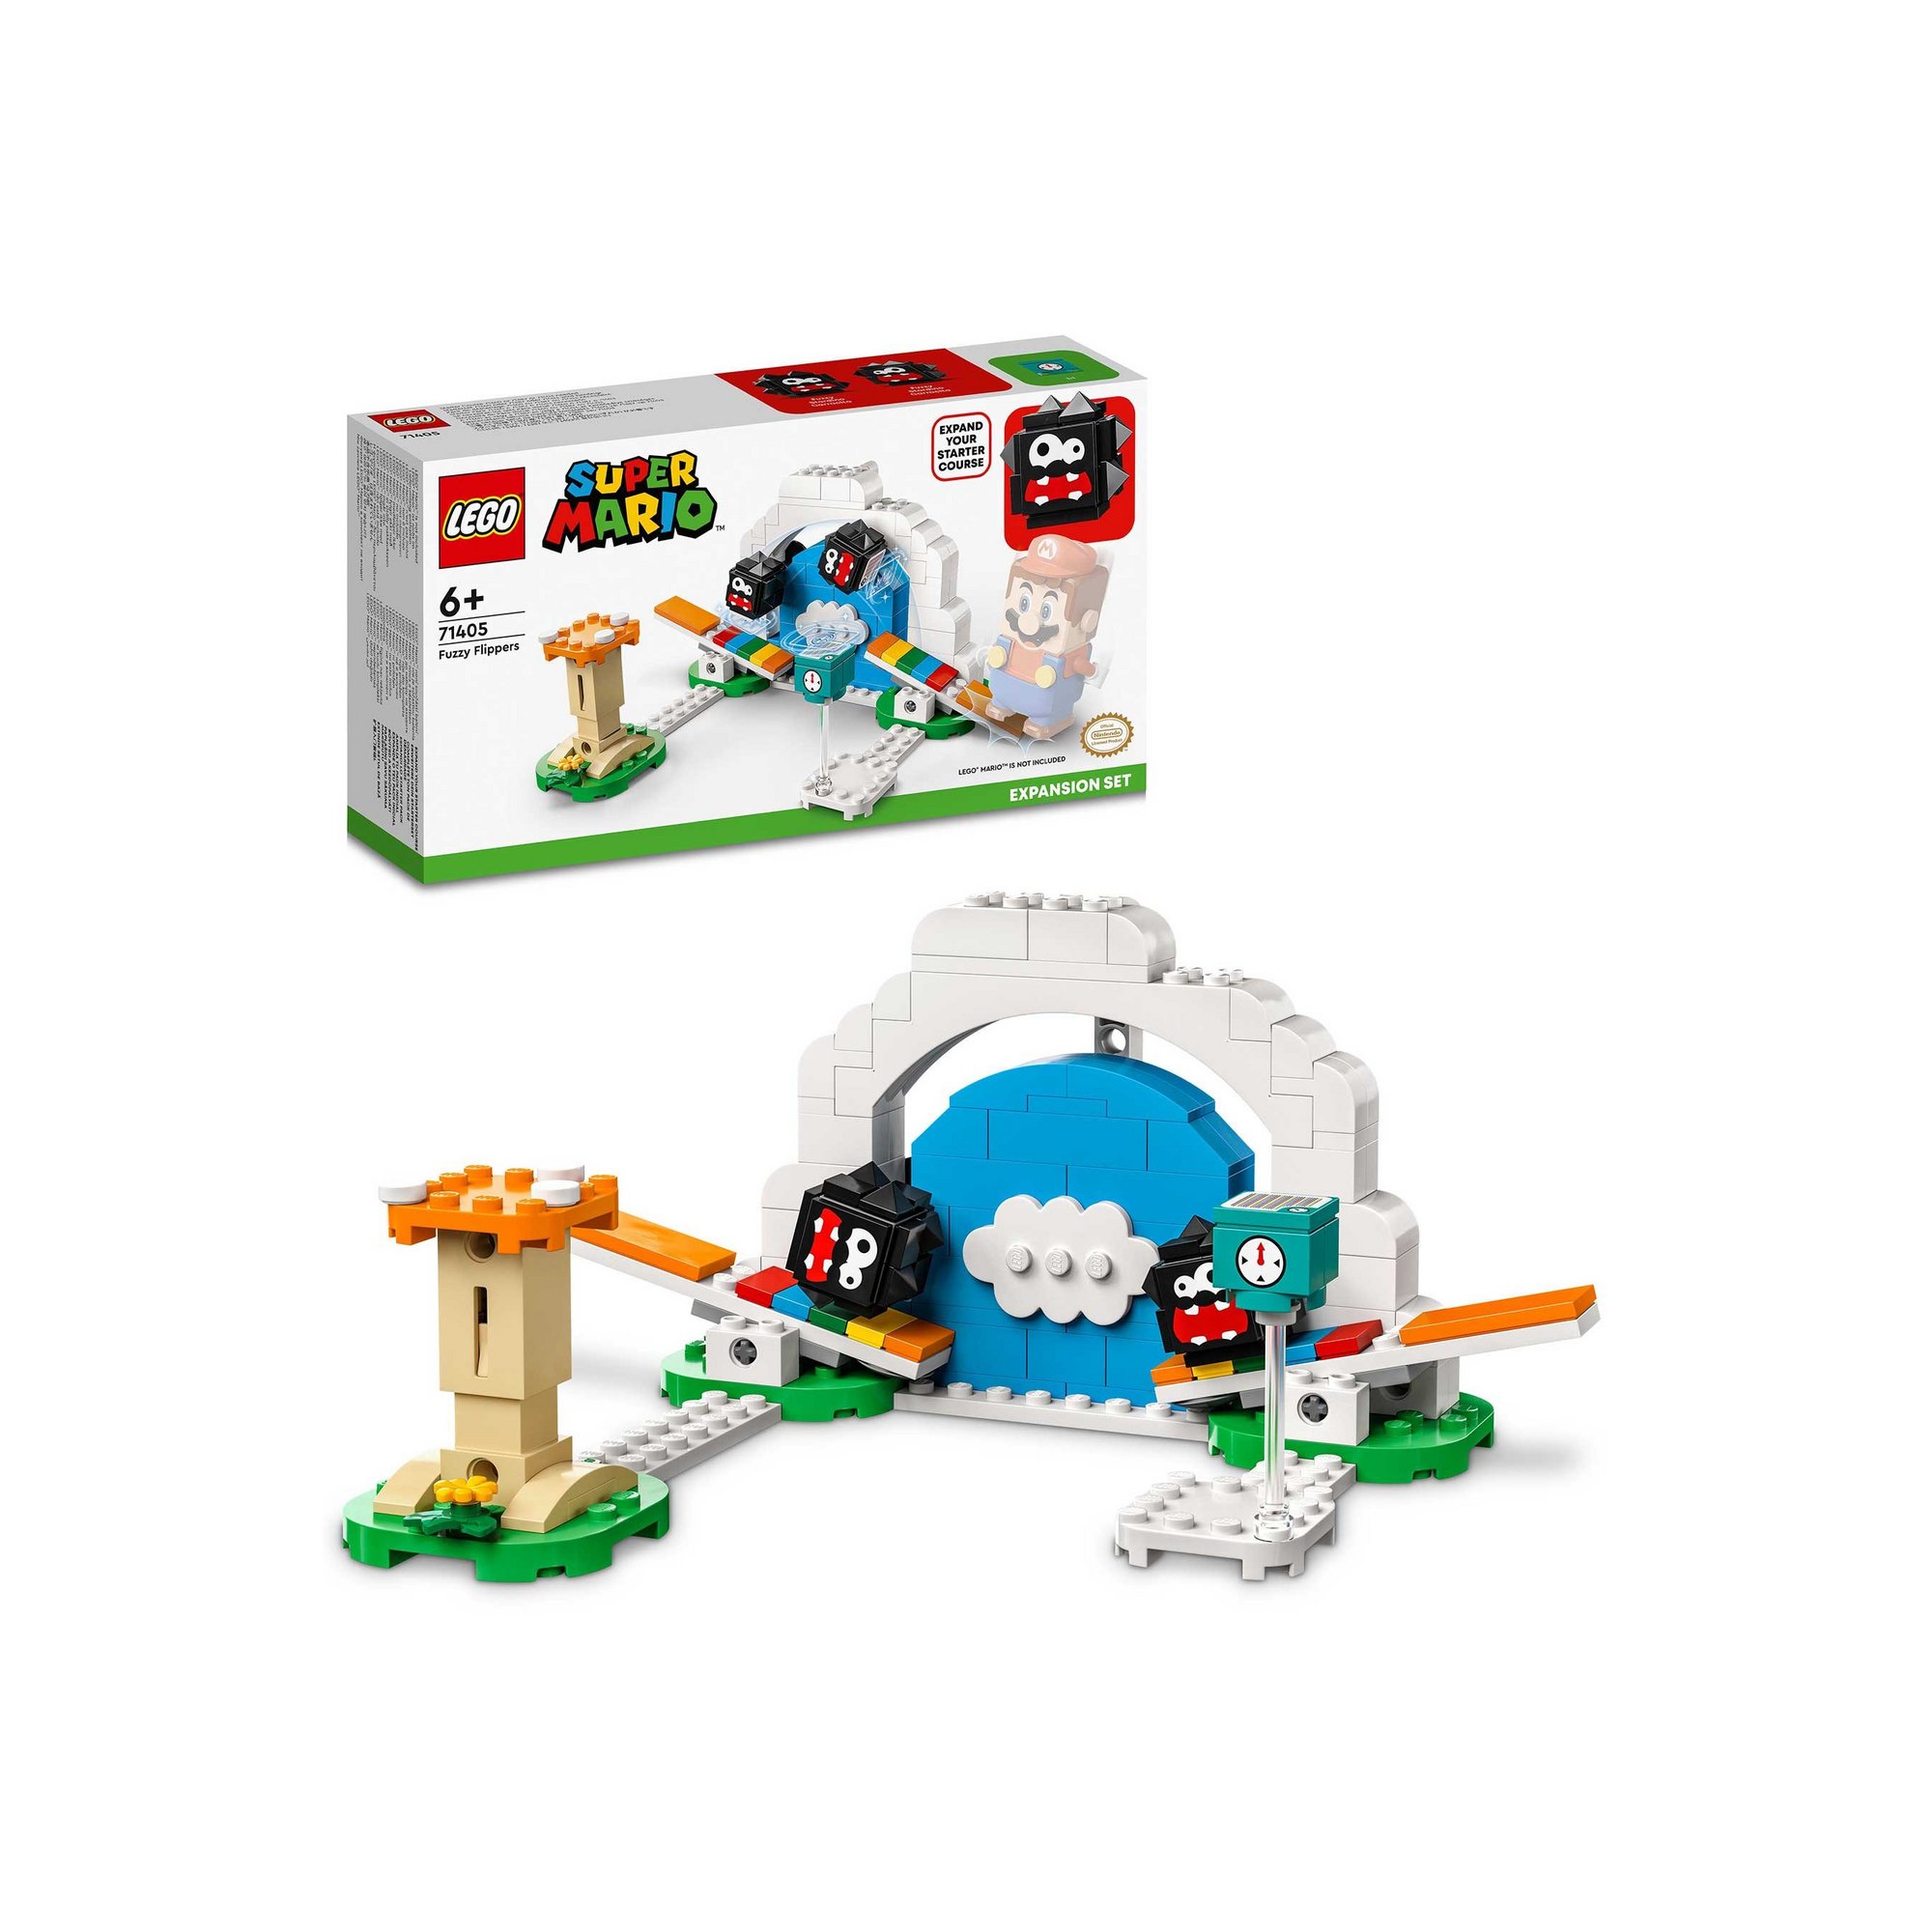 LEGO Super Mario Fuzzy Flippers Expansion Set